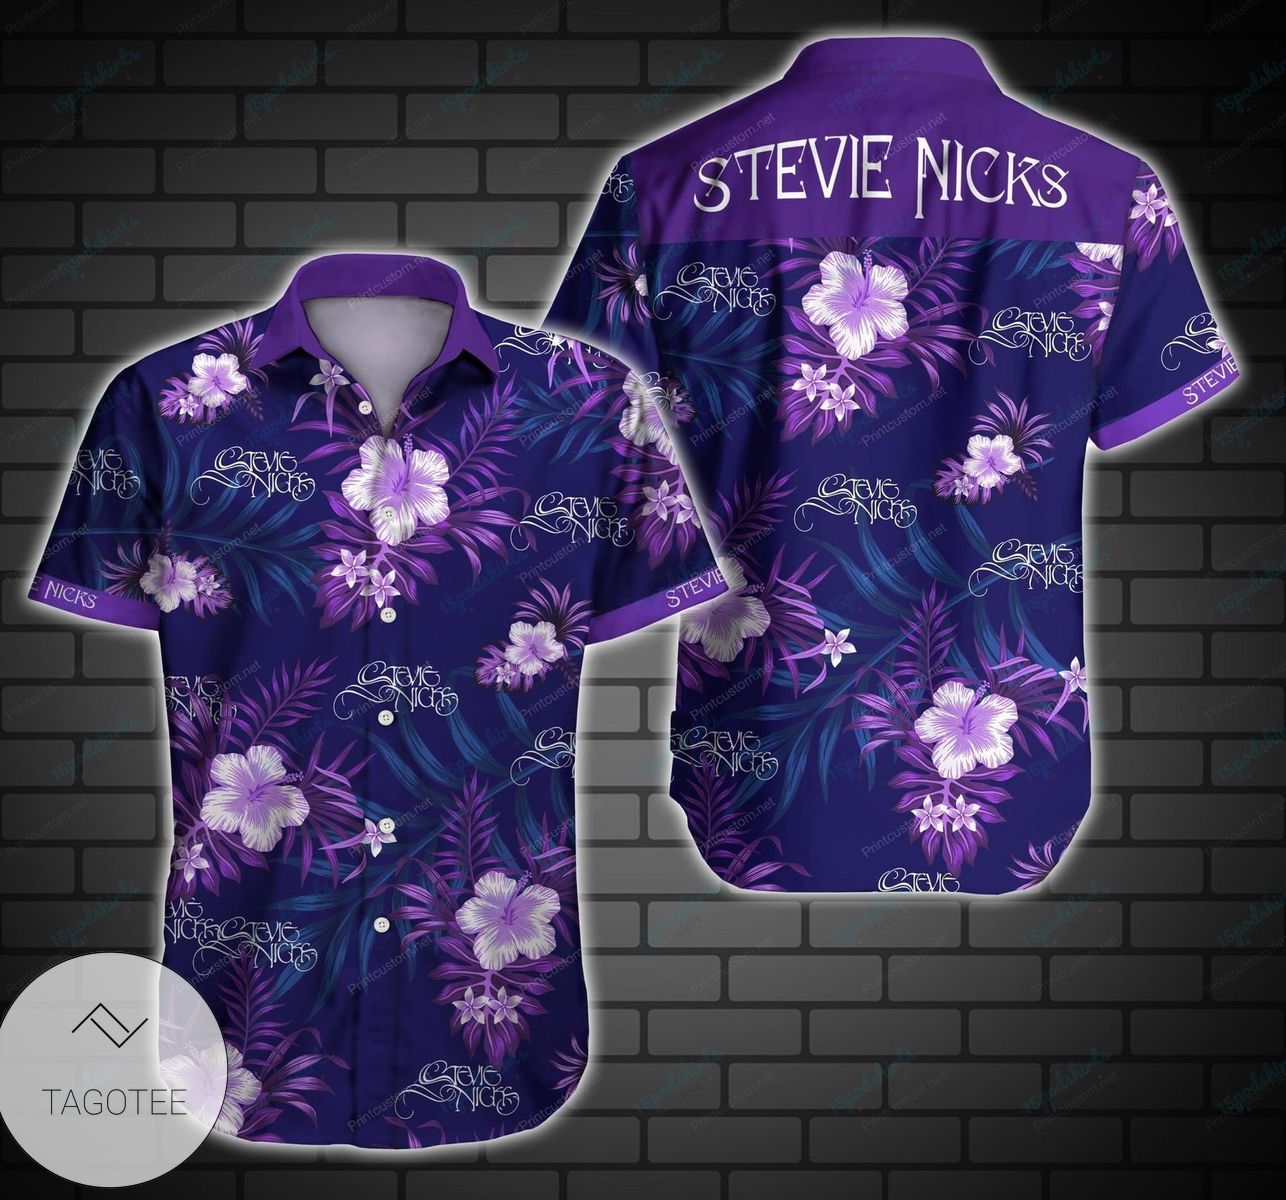 Stevie Nicks Hawaiian Shirt